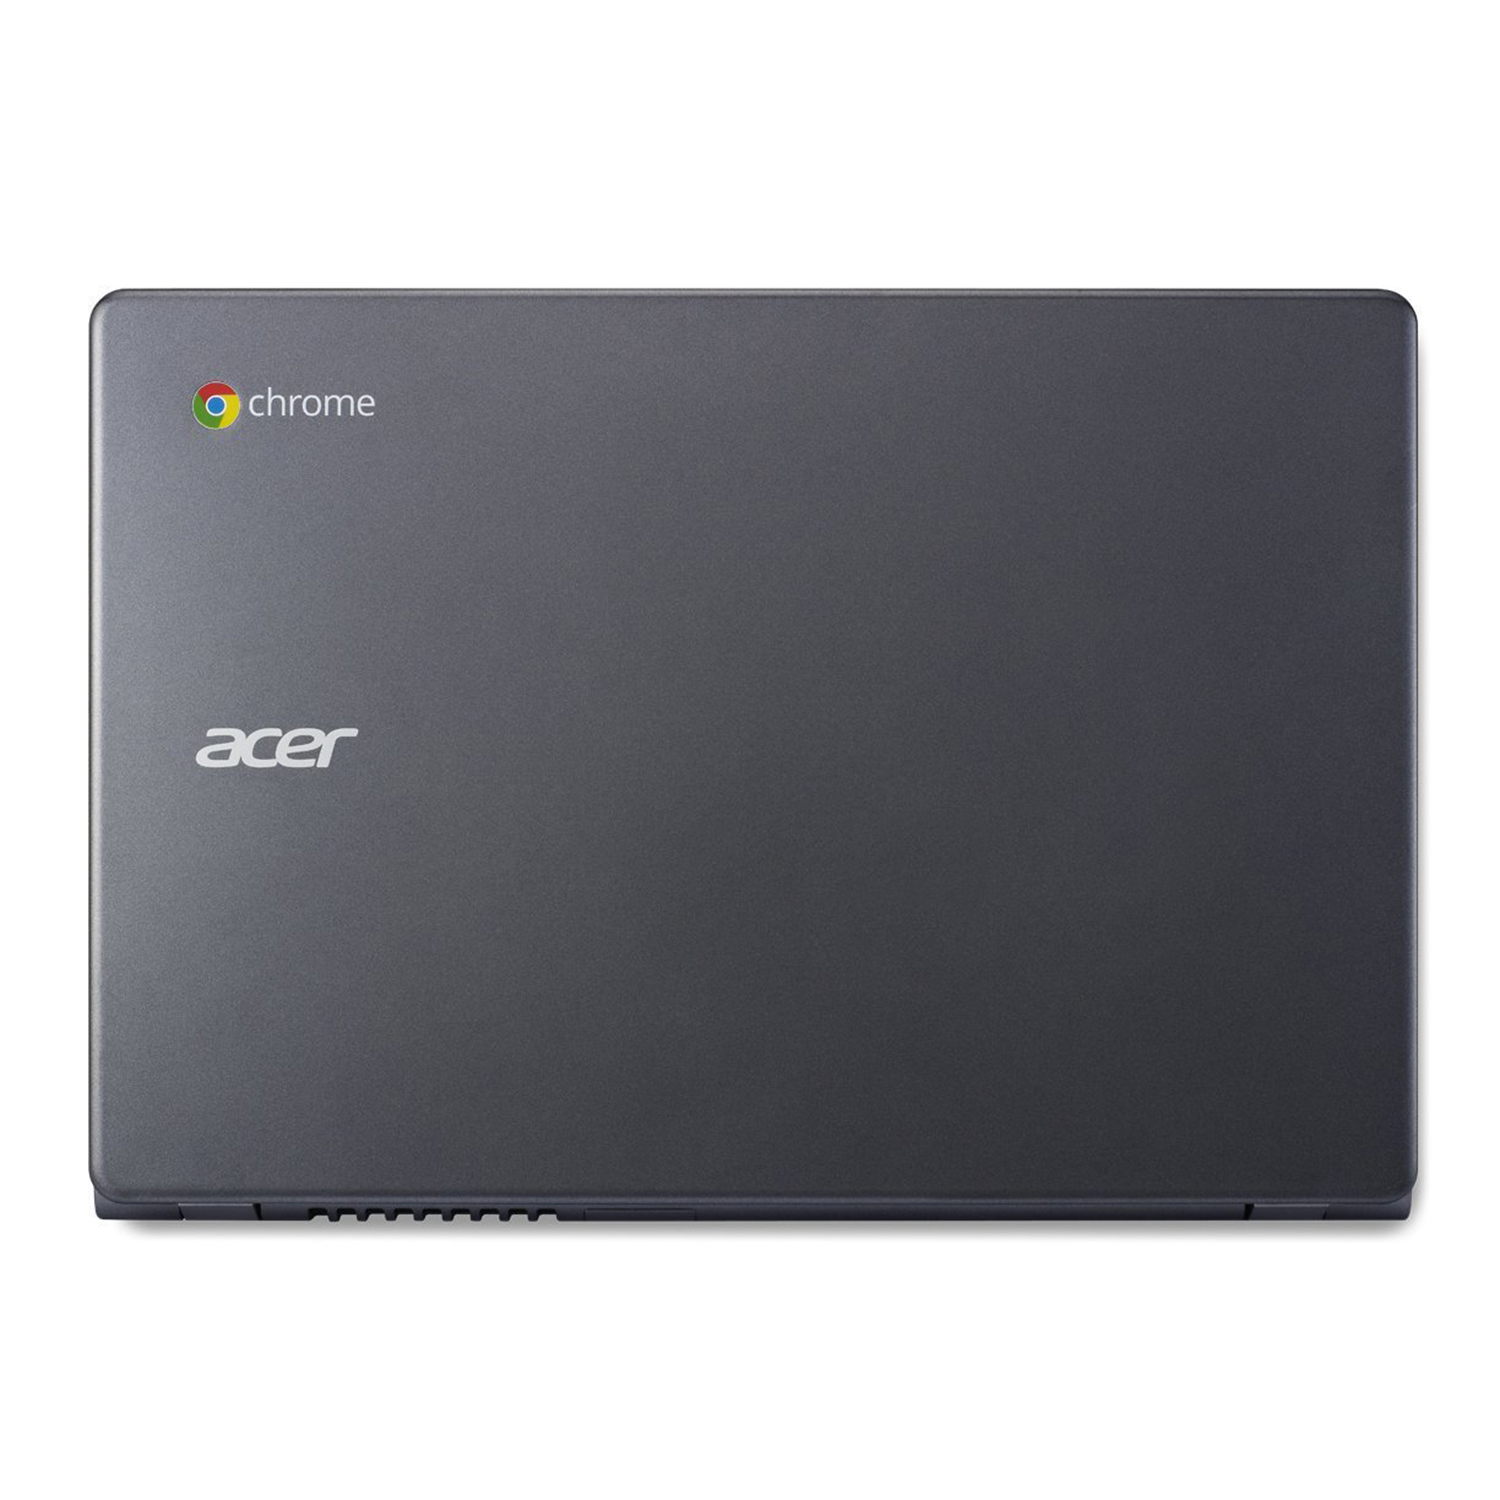 Acer C720-2844 11.6" Google Chromebook Notebook Laptop 4GB RAM 16GB SSD Refurbished